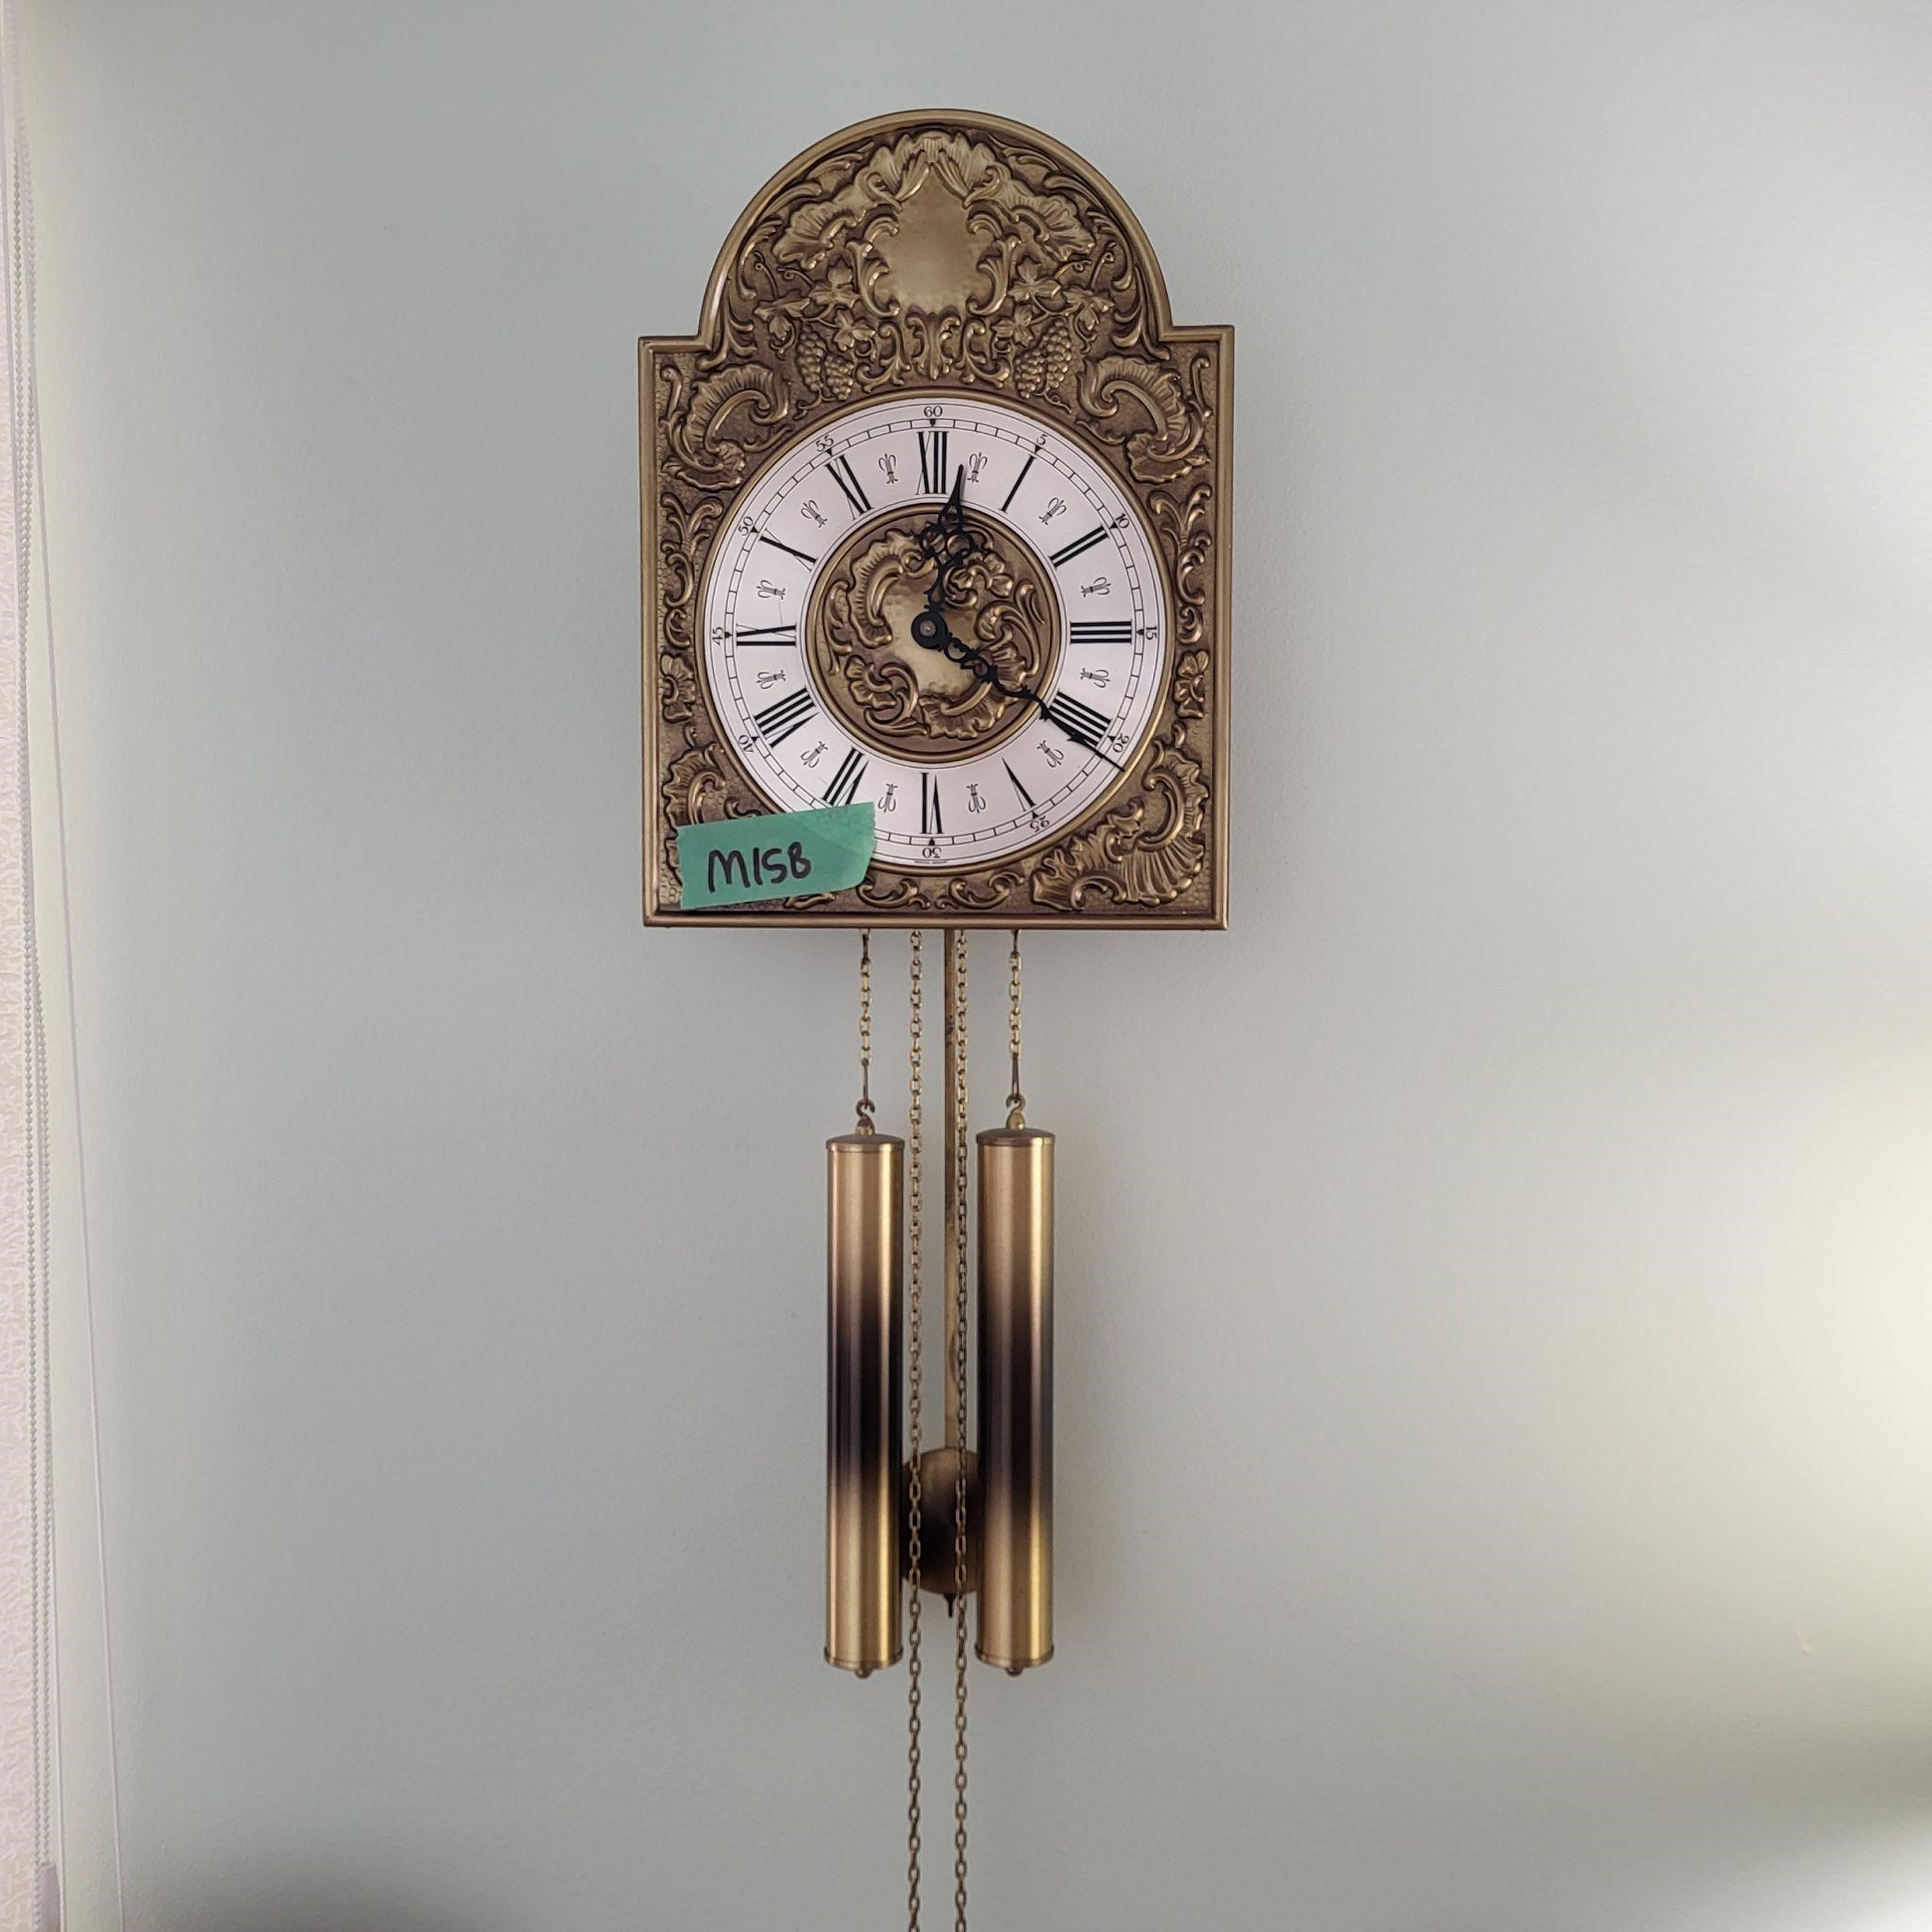 M158 Ornate Brass Wall clock w weights